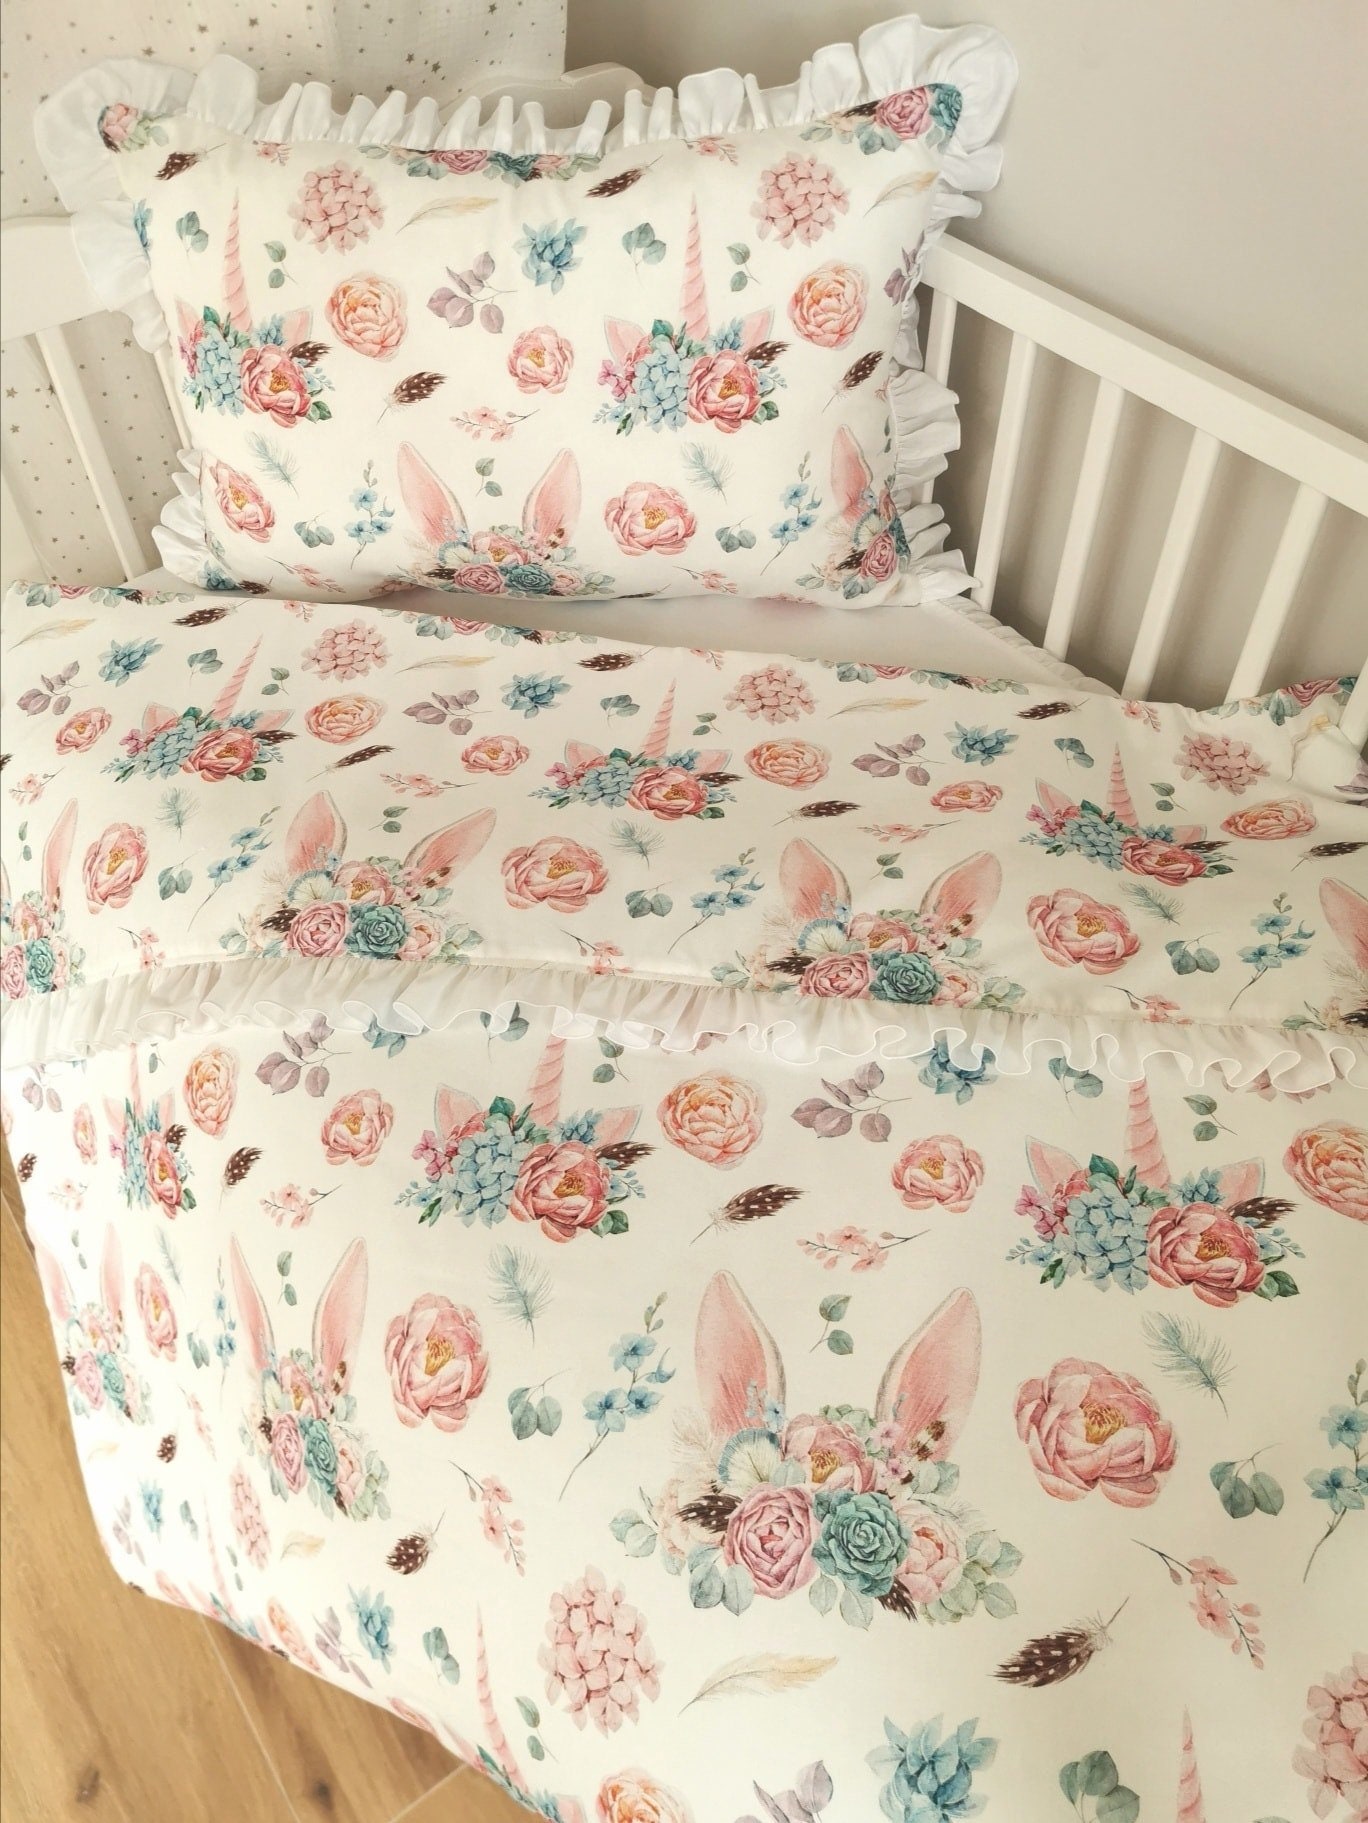 Duvet Cover 100 x 135 cm pillow 40x60cm 'My Litte Dog' Baby Cot Bed Set 